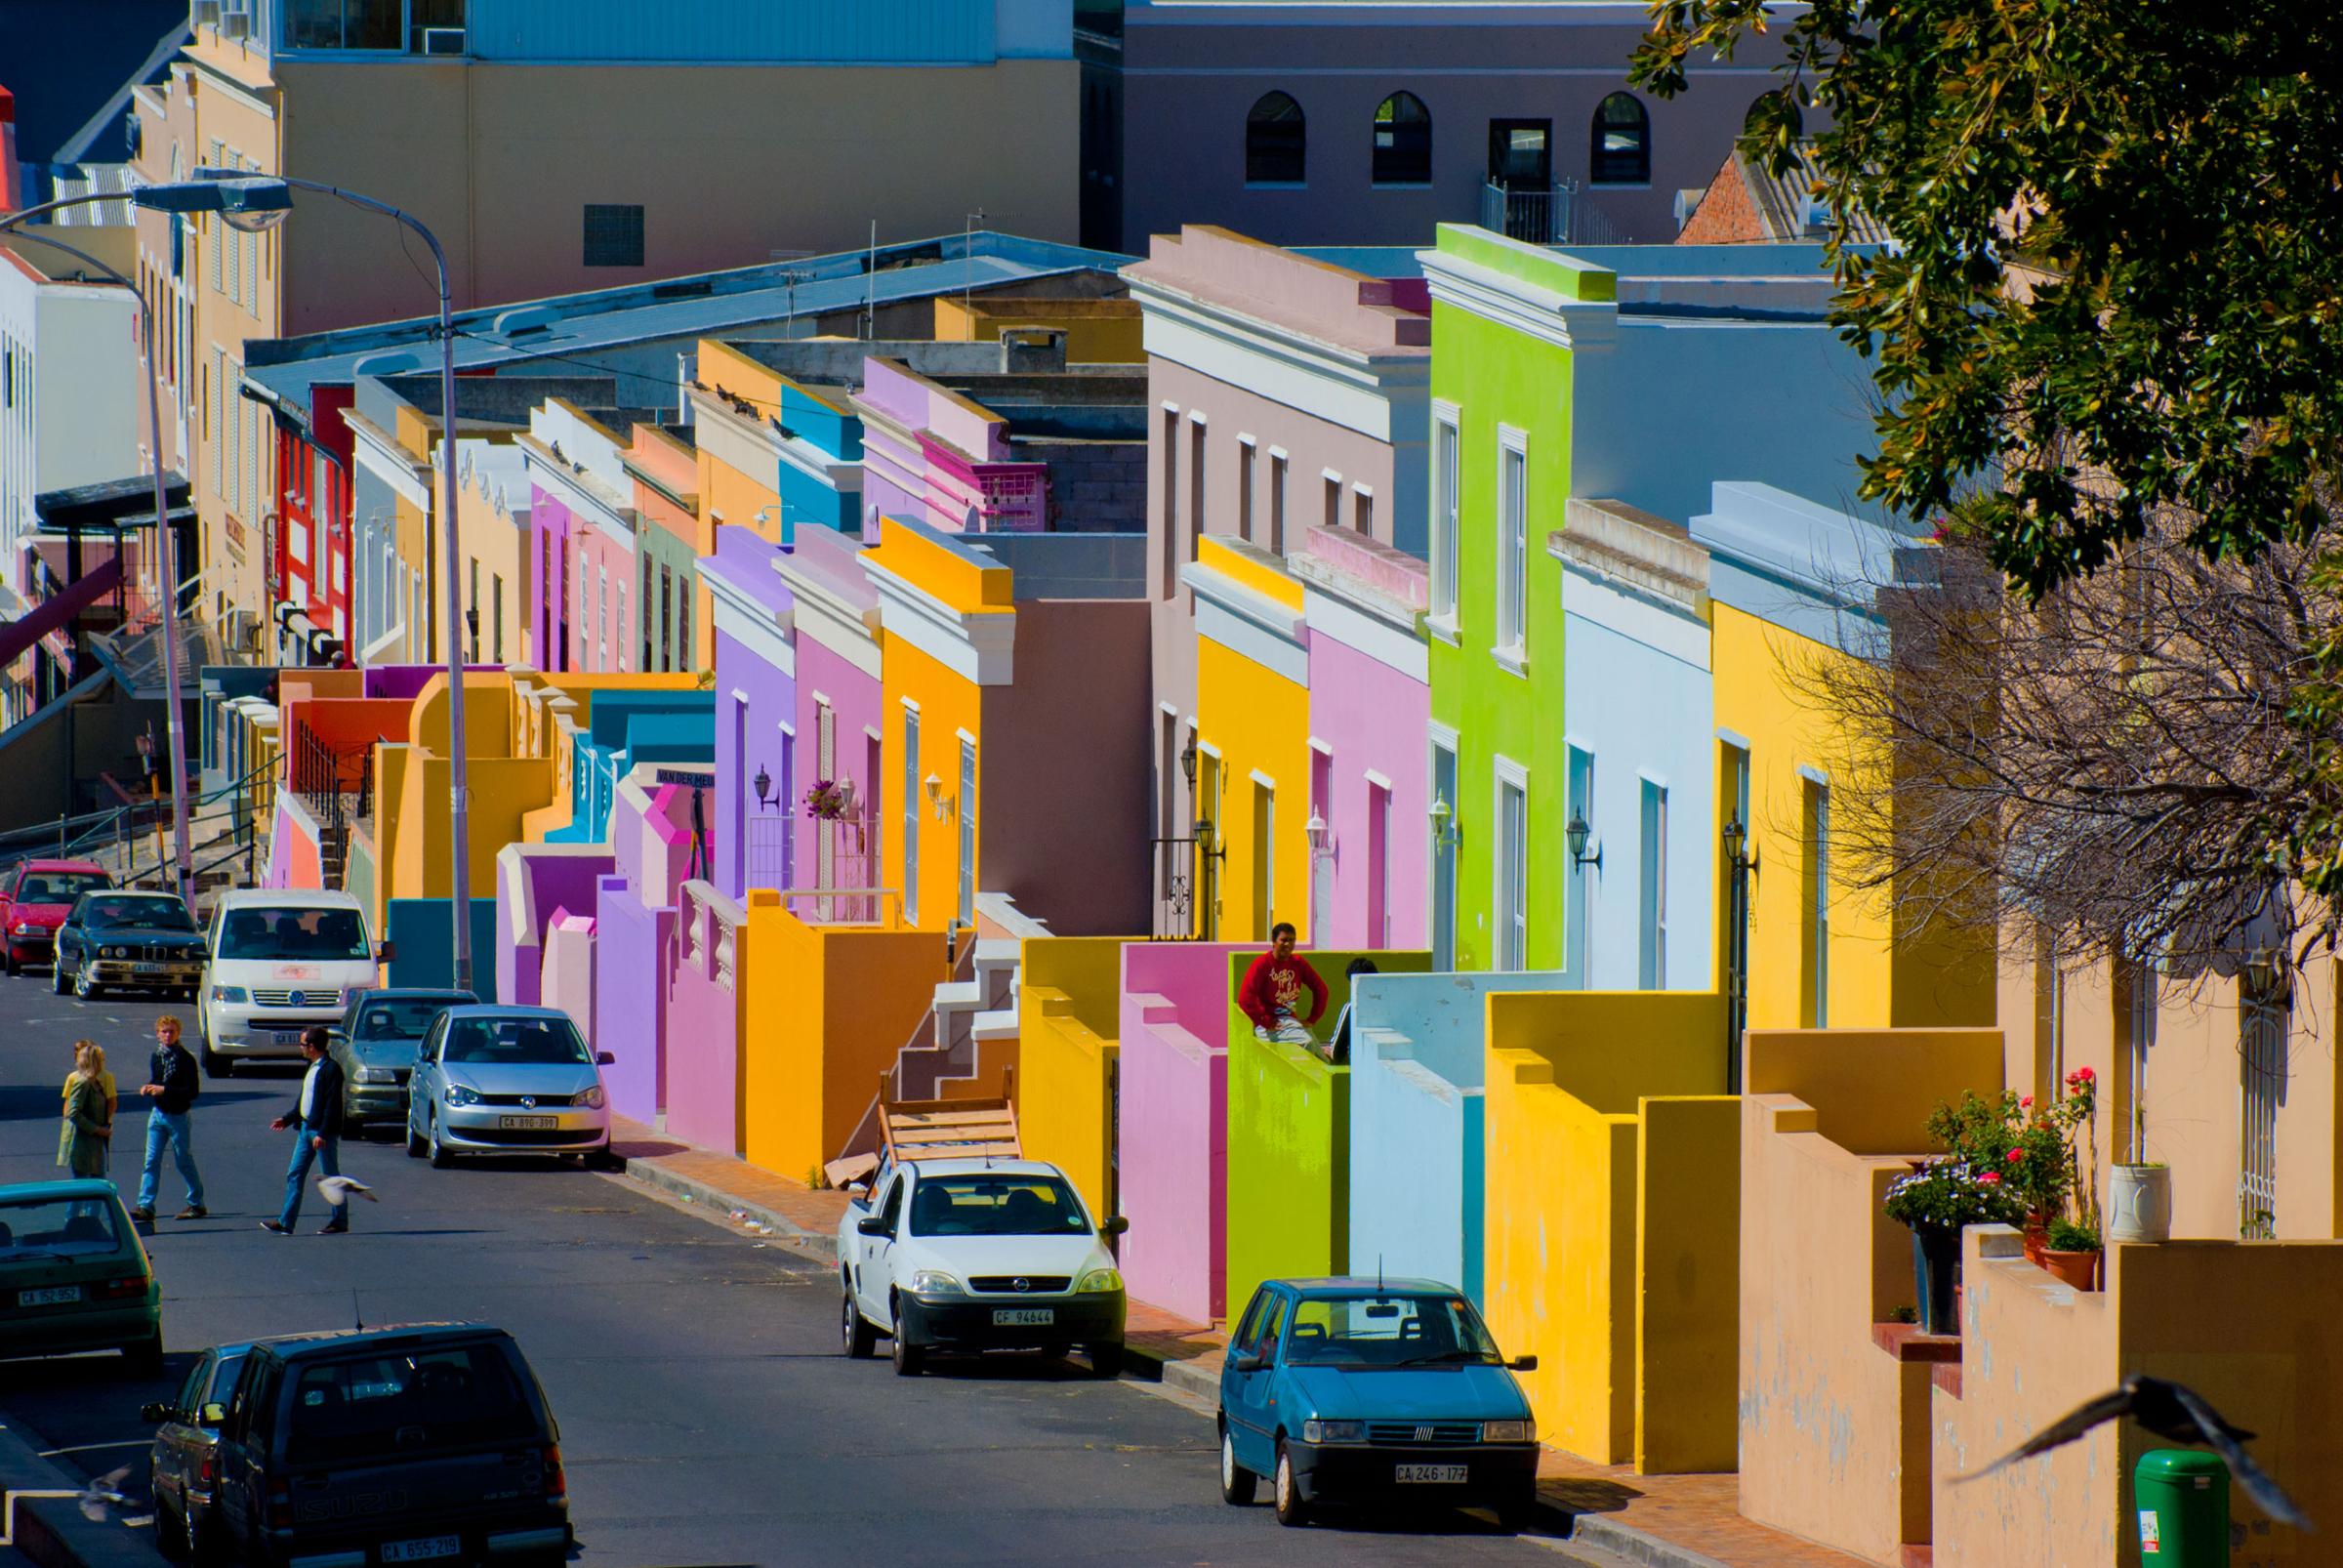 Houses in Bo Kaap, Cape Town.